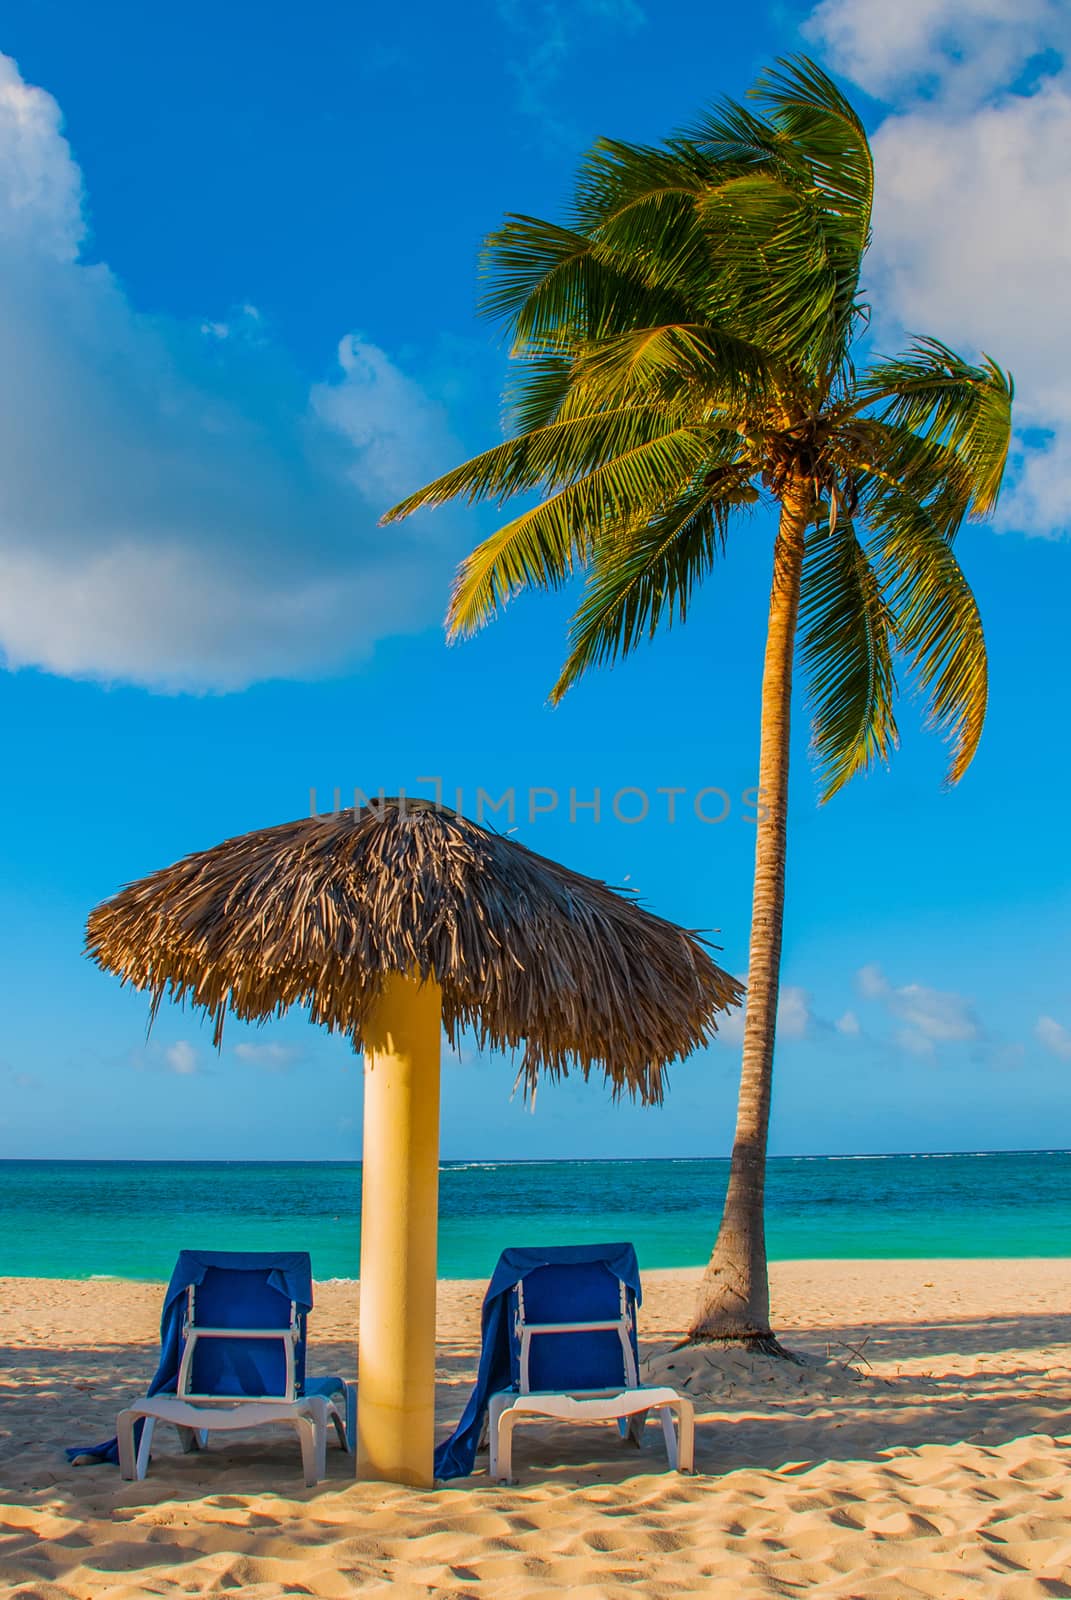 Holguin, Cuba, Playa Esmeralda. Umbrella and two lounge chairs around palm trees. Tropical beach on the Caribbean sea. by Artamonova